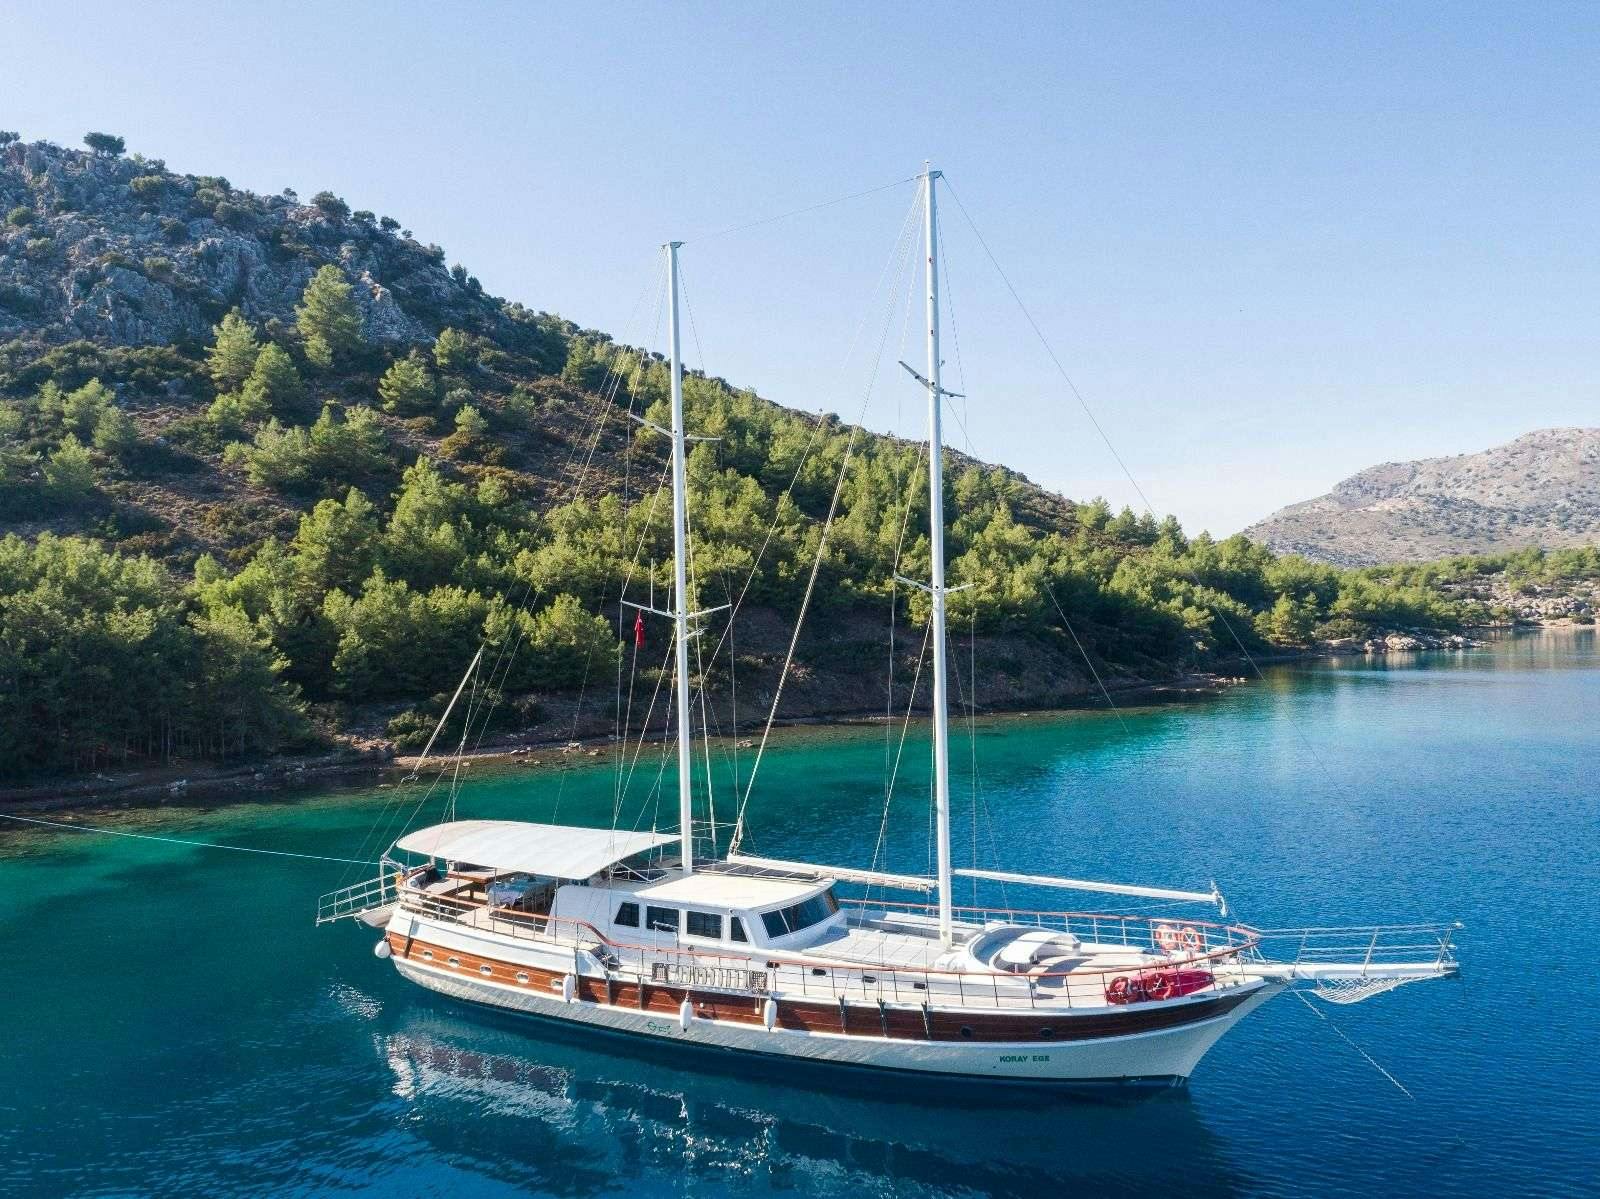 koray ege - Superyacht charter Saint Lucia & Boat hire in Greece & Turkey 1